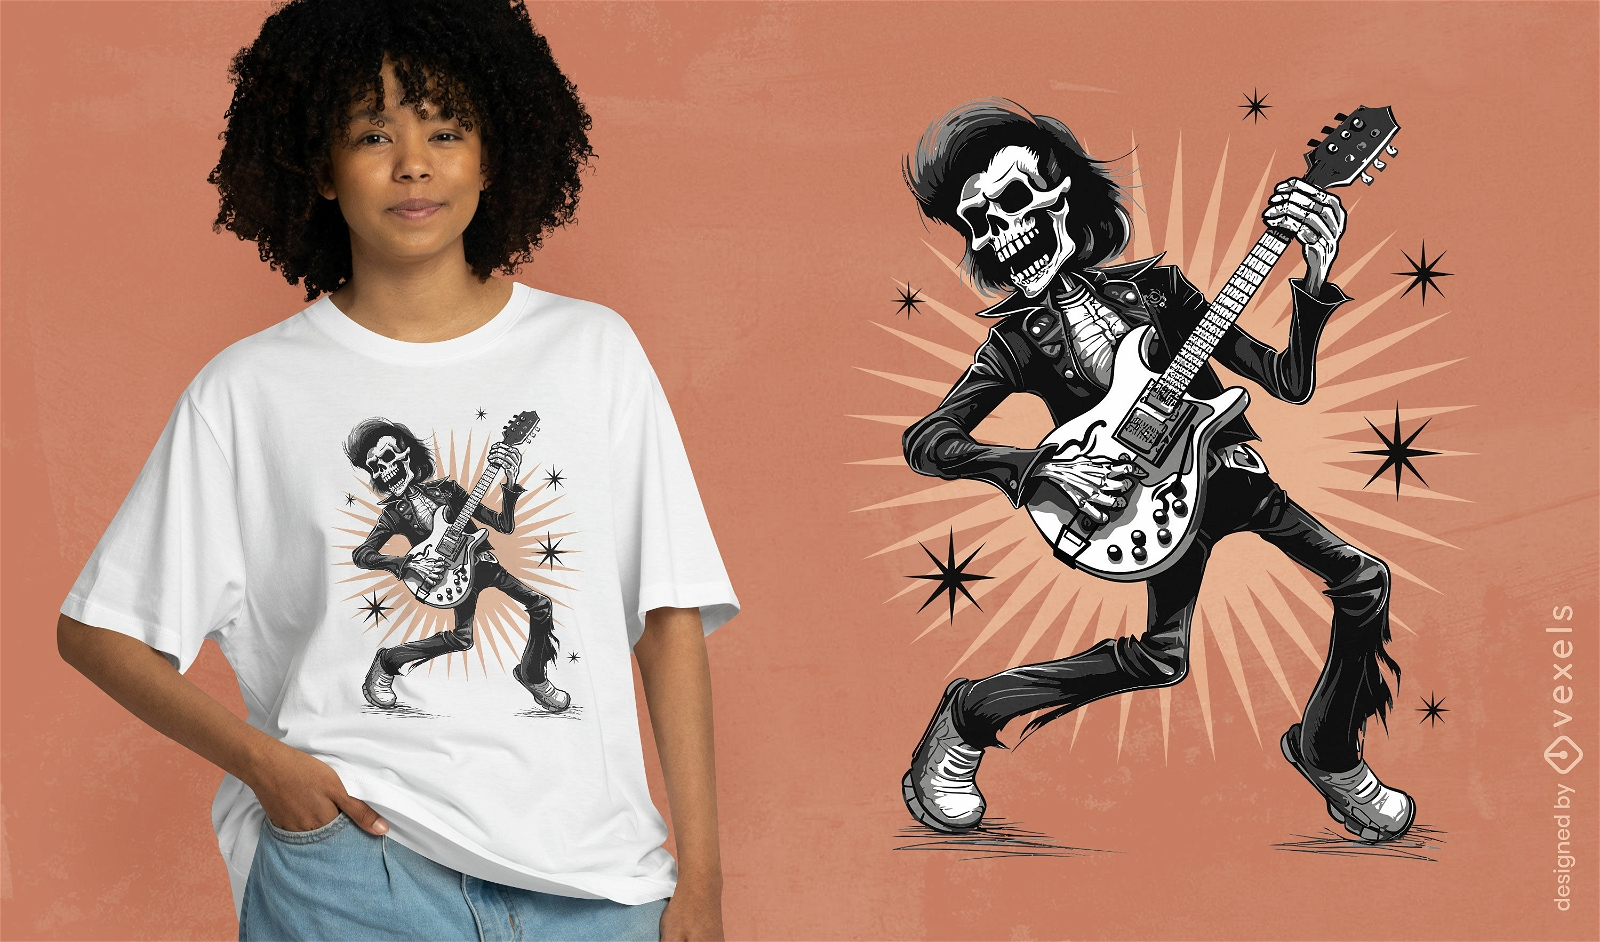 Skeleton electric guitar t-shirt design